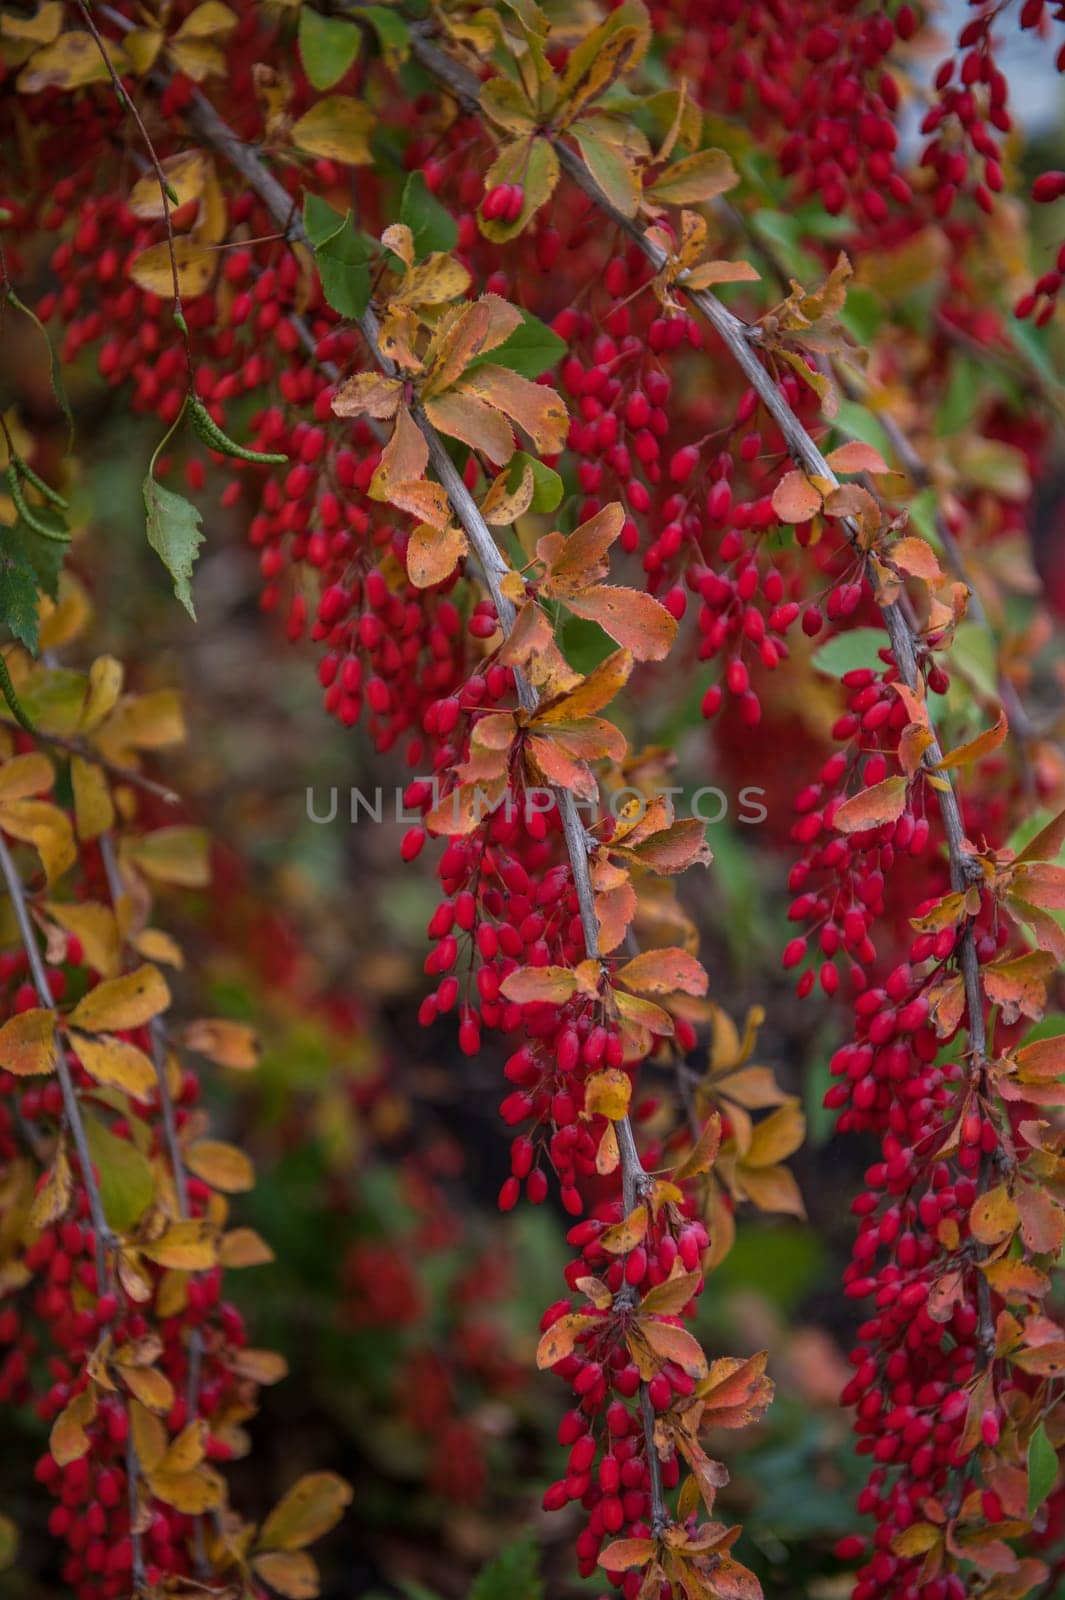 Red Berberis vulgaris berries on branch in autumn garden, ready for harvesting.